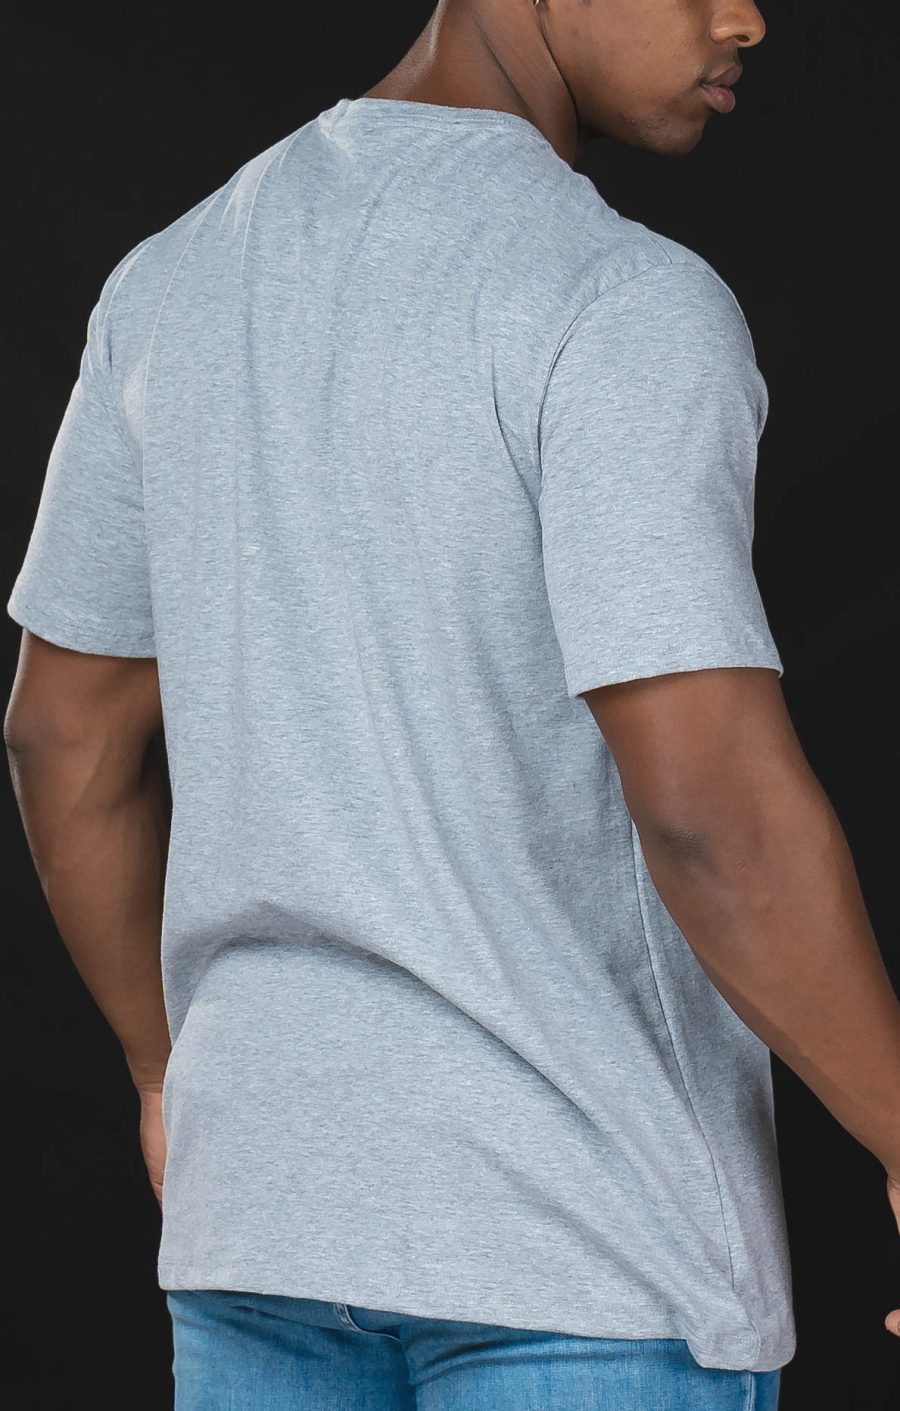 camiseta-masculina-diesel-denim-division-costas-cinza.jpg